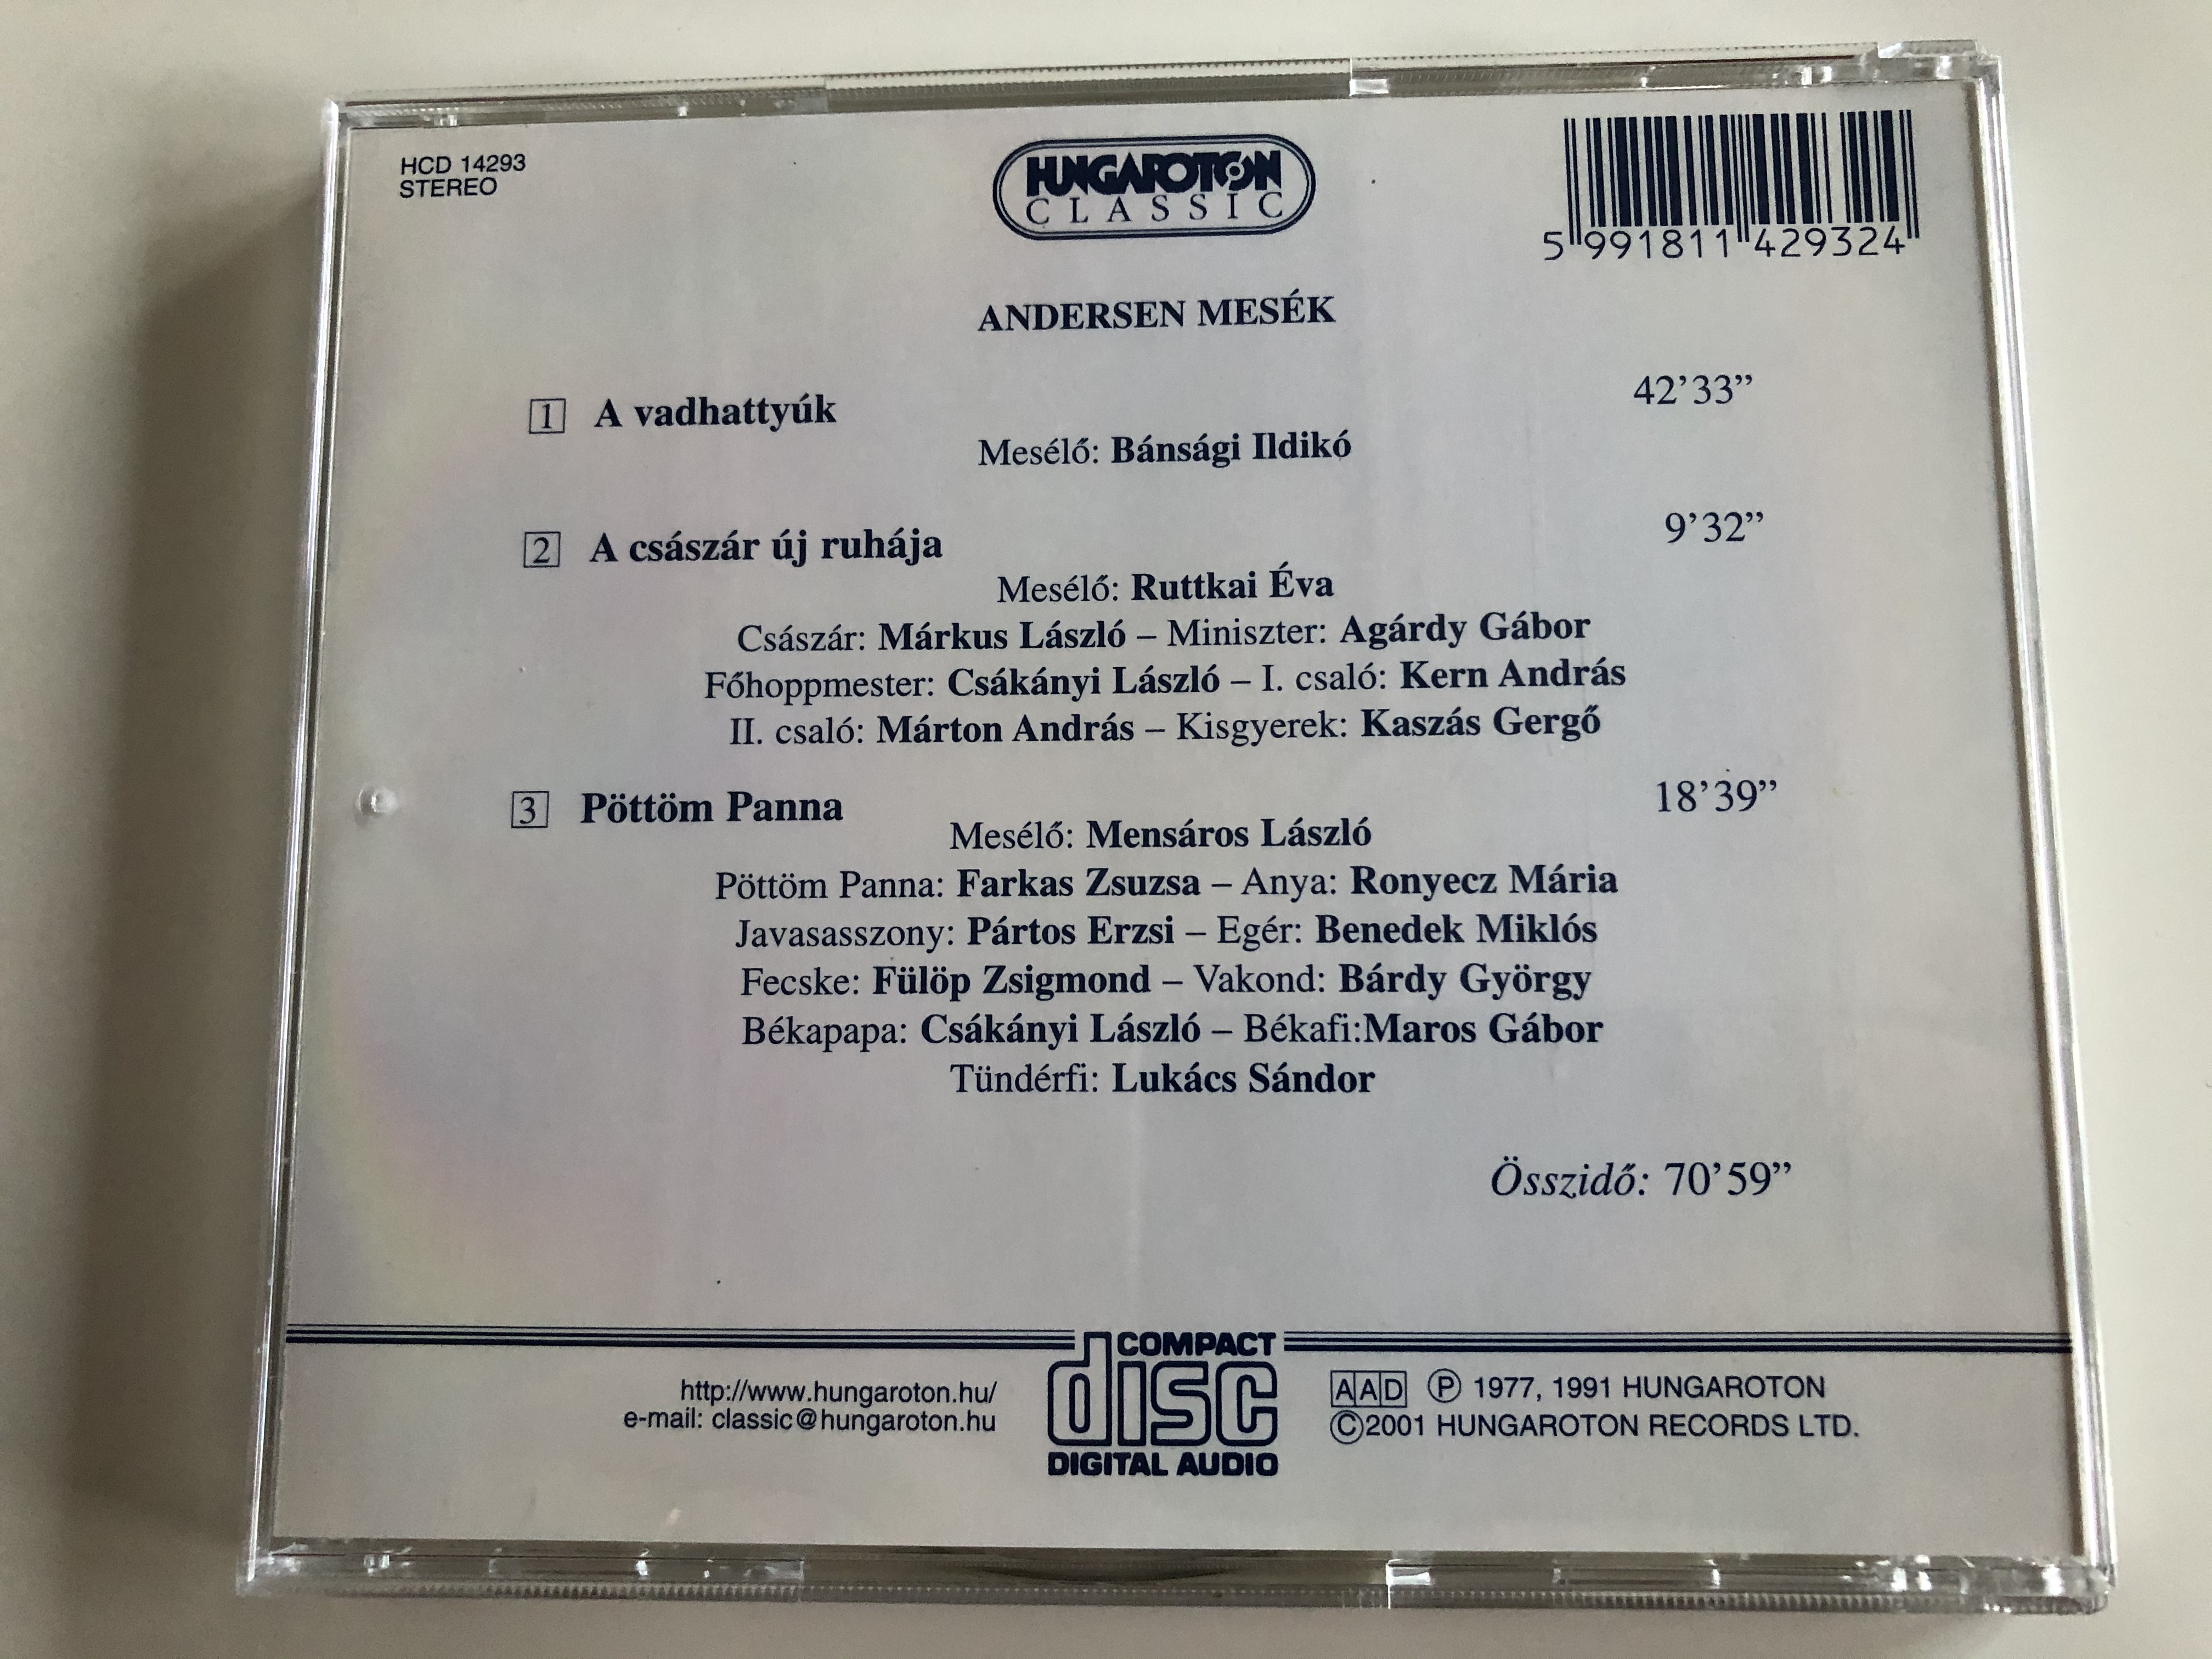 andersen-mesek-a-vadhatty-k-a-cs-sz-r-j-ruh-ja-p-tt-m-panna-hungaroton-classic-audio-cd-2001-stereo-hcd-14293-5-.jpg